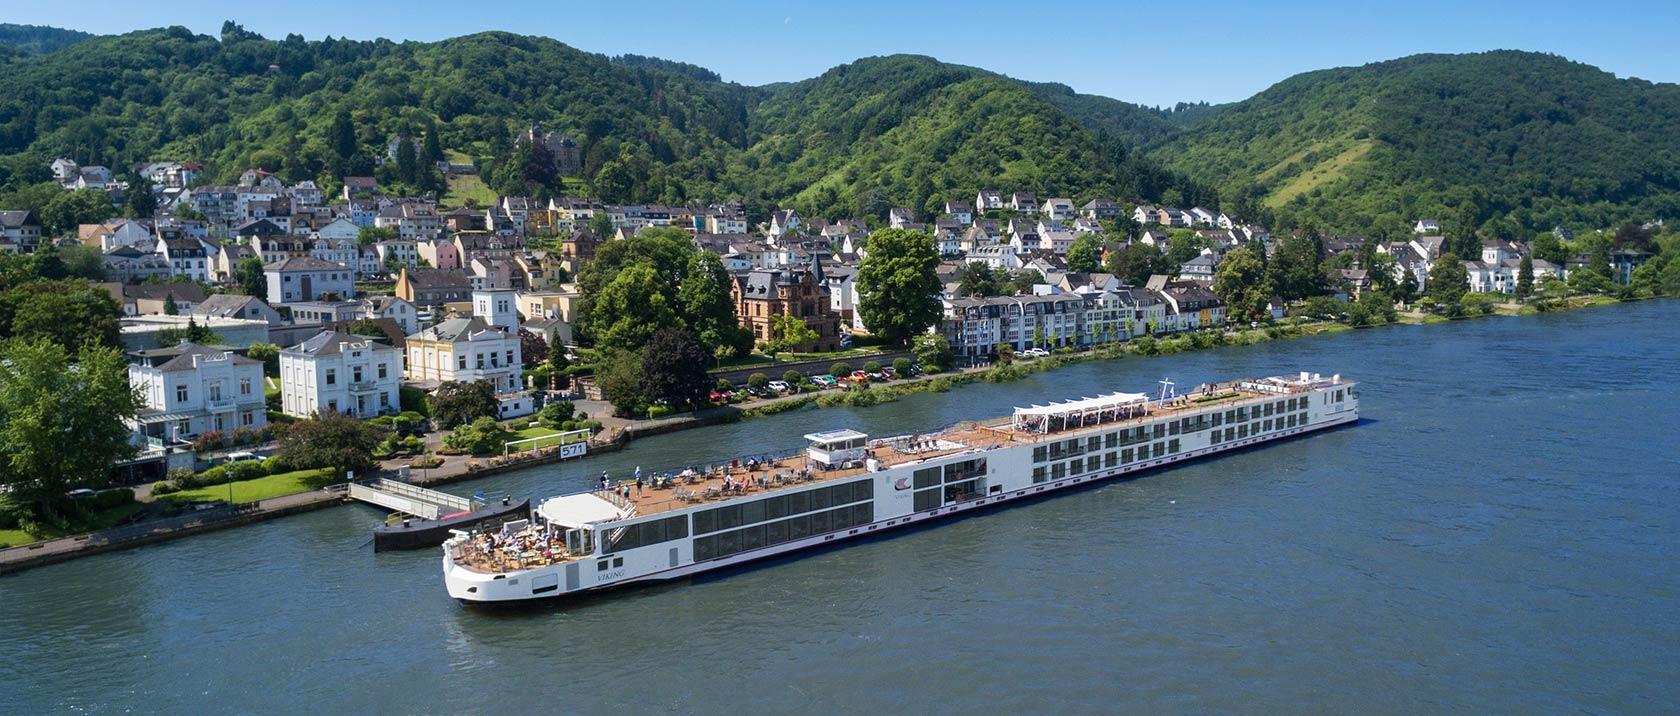 River Cruises background